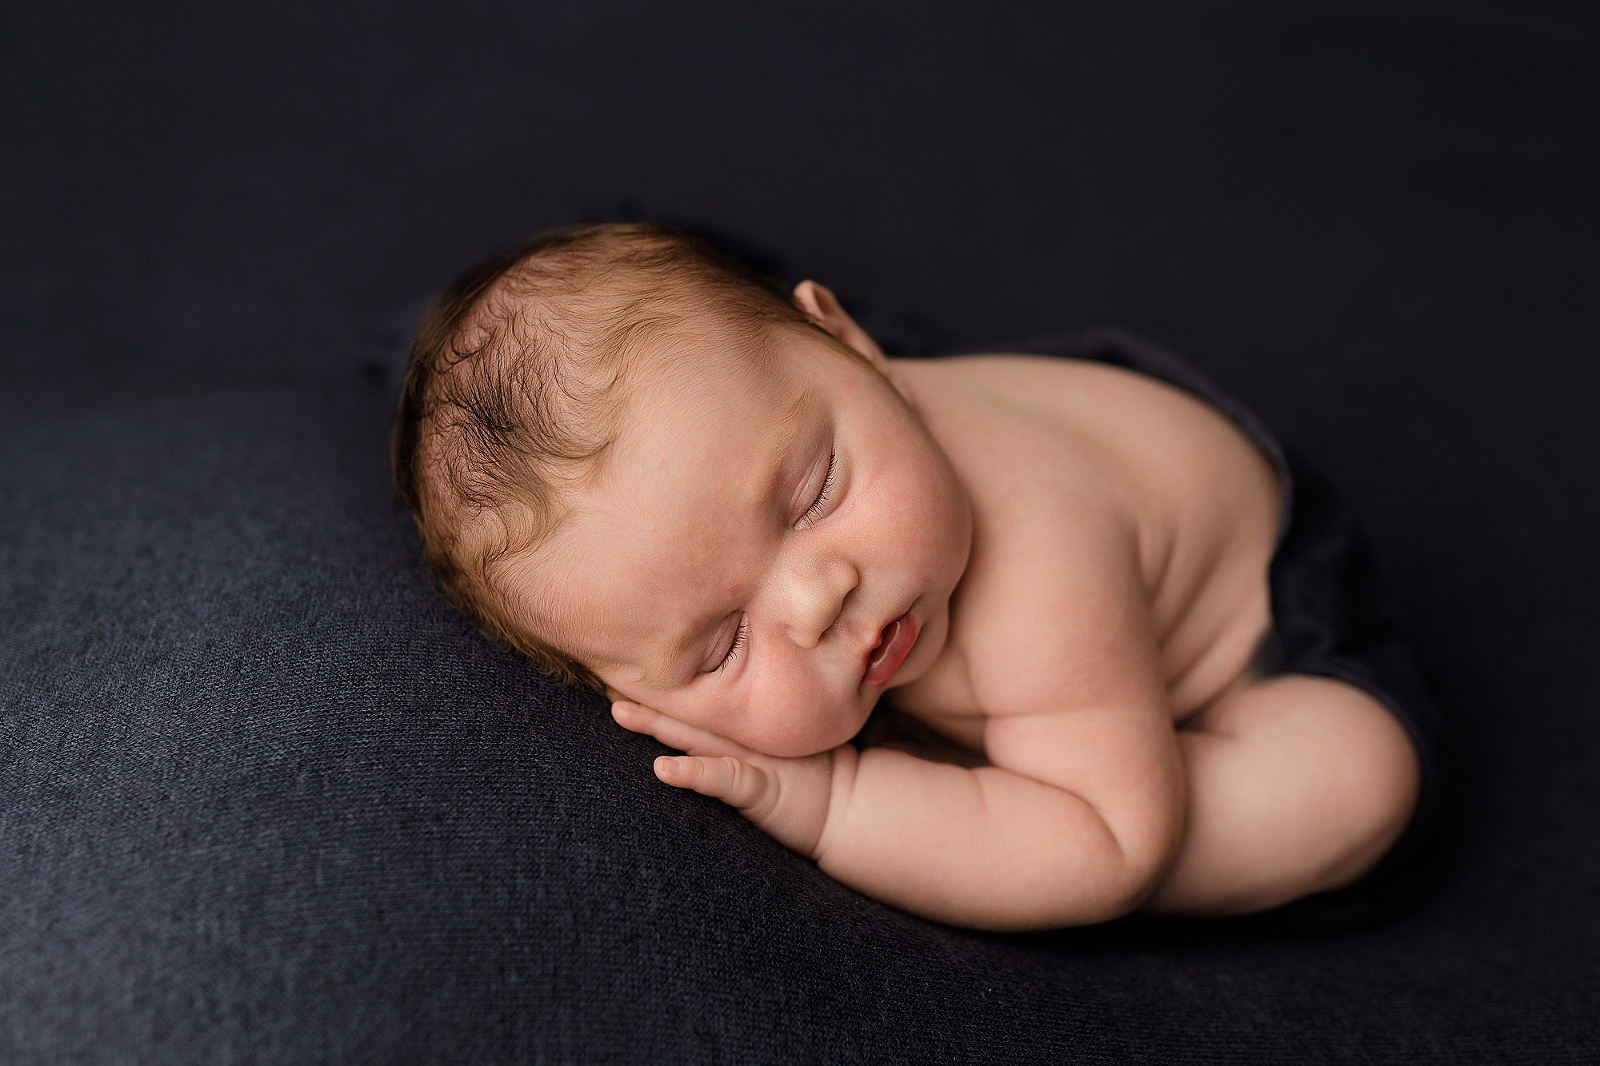 suwanee ga newborn photography, newborn photos atlanta, professional newborn photography